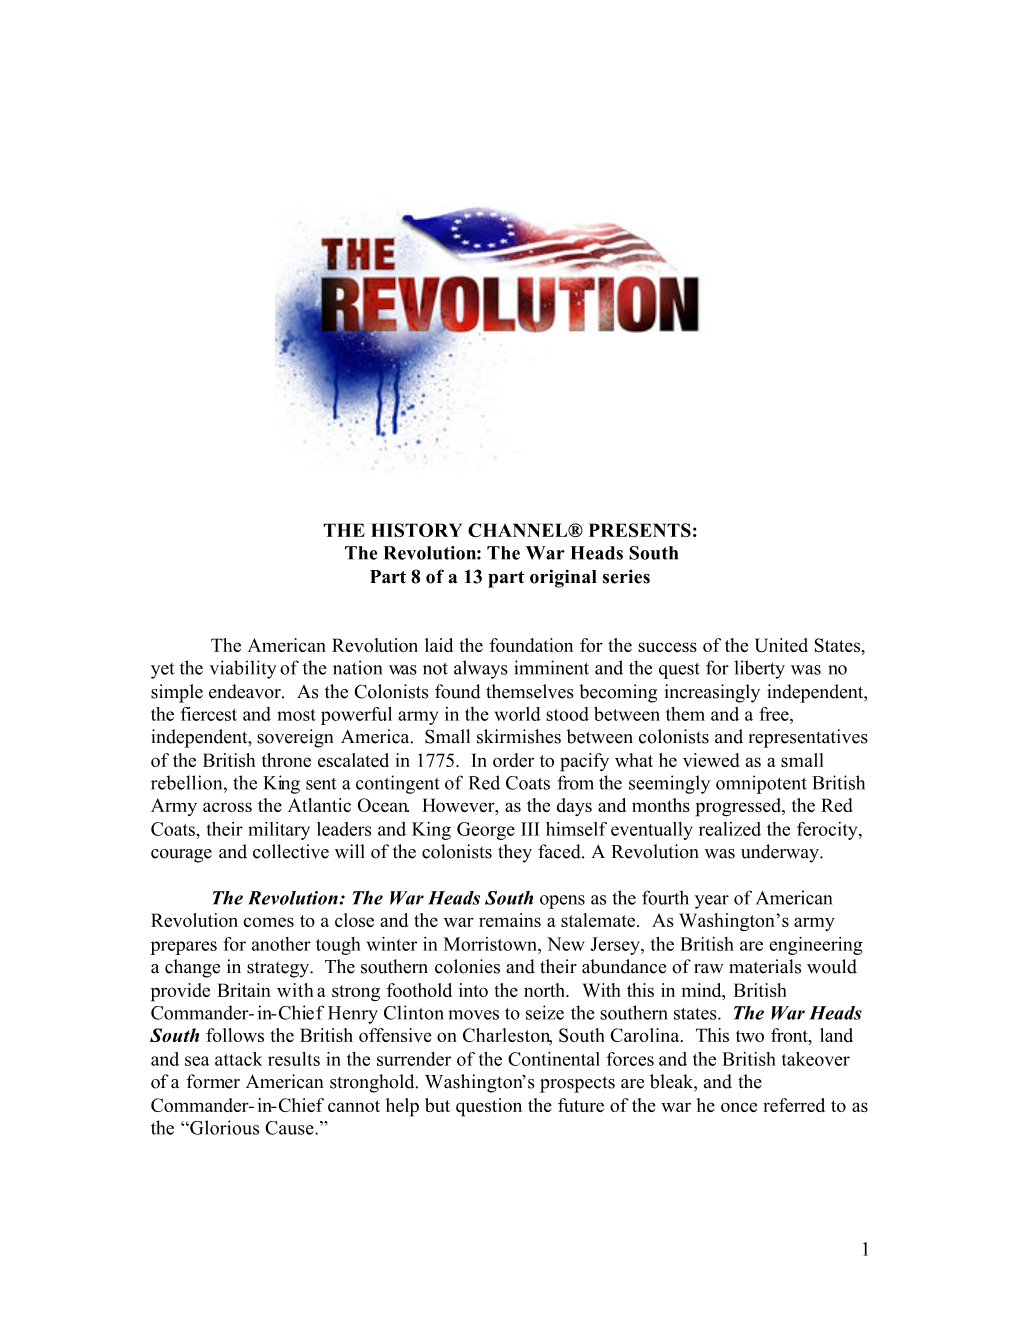 The Revolution: the War Heads South Part 8 of a 13 Part Original Series